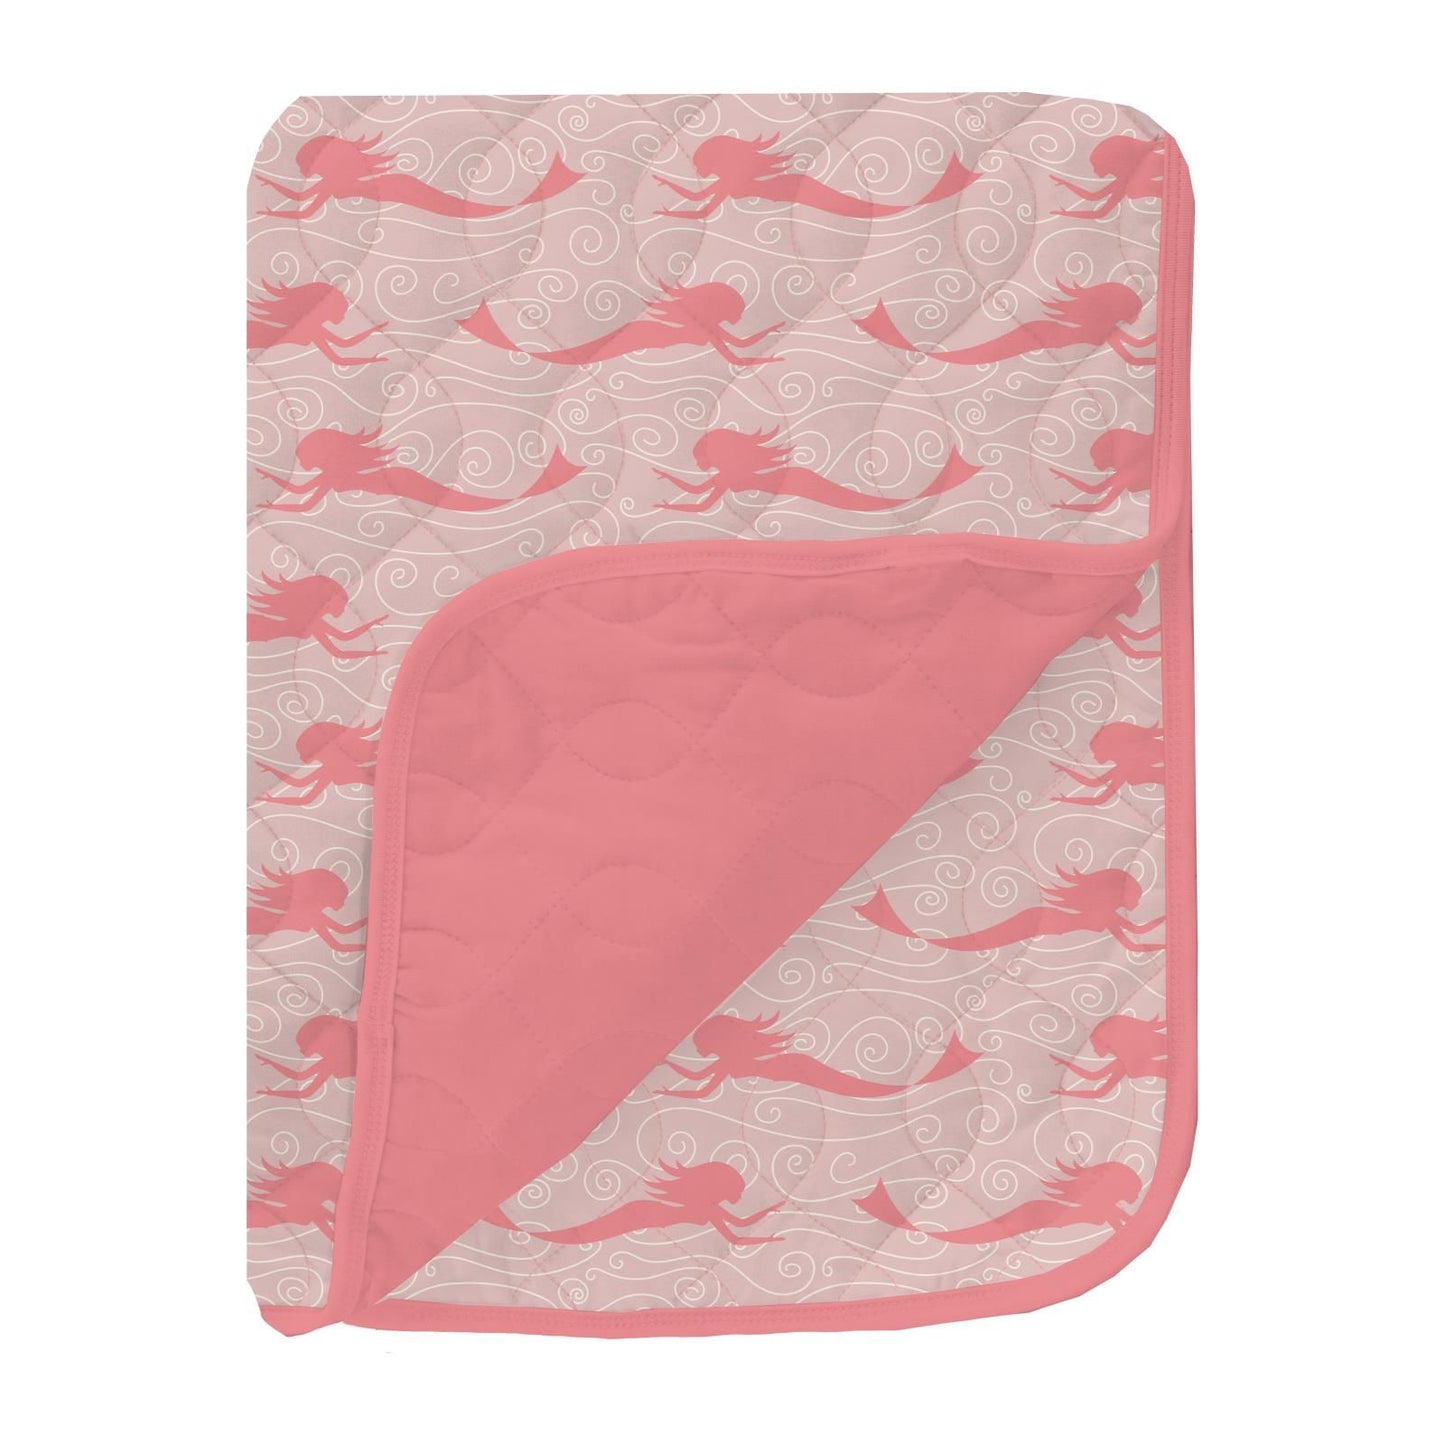 Quilted Stroller Blanket - Baby Rose Mermaid + Strawberry